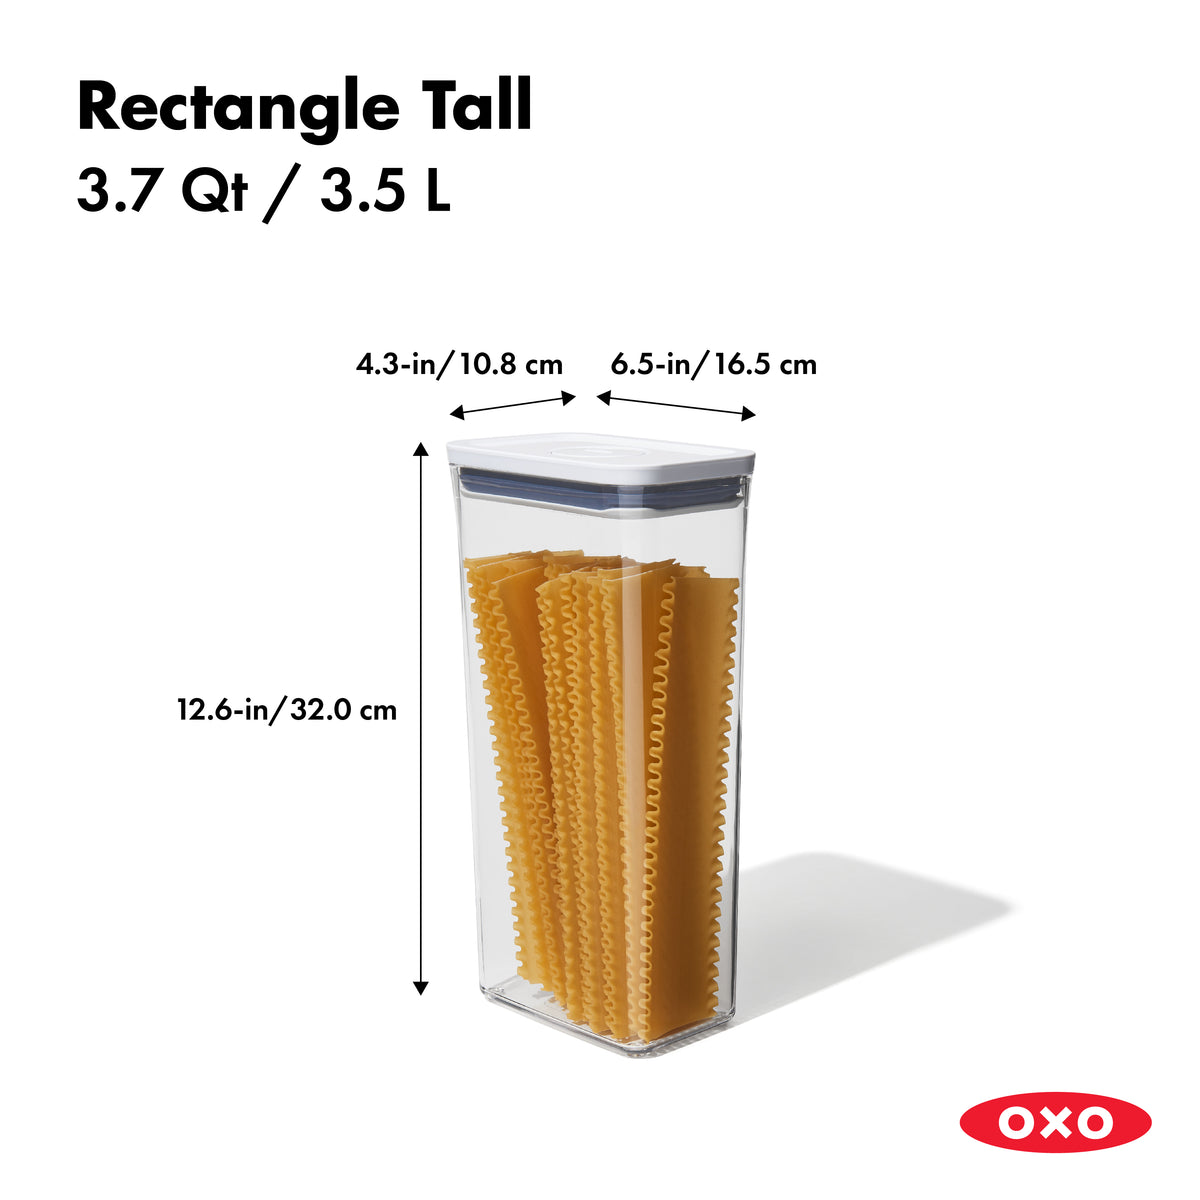 OXO Good Grips Pop 2.0 Rectangle, Tall - 3.5L